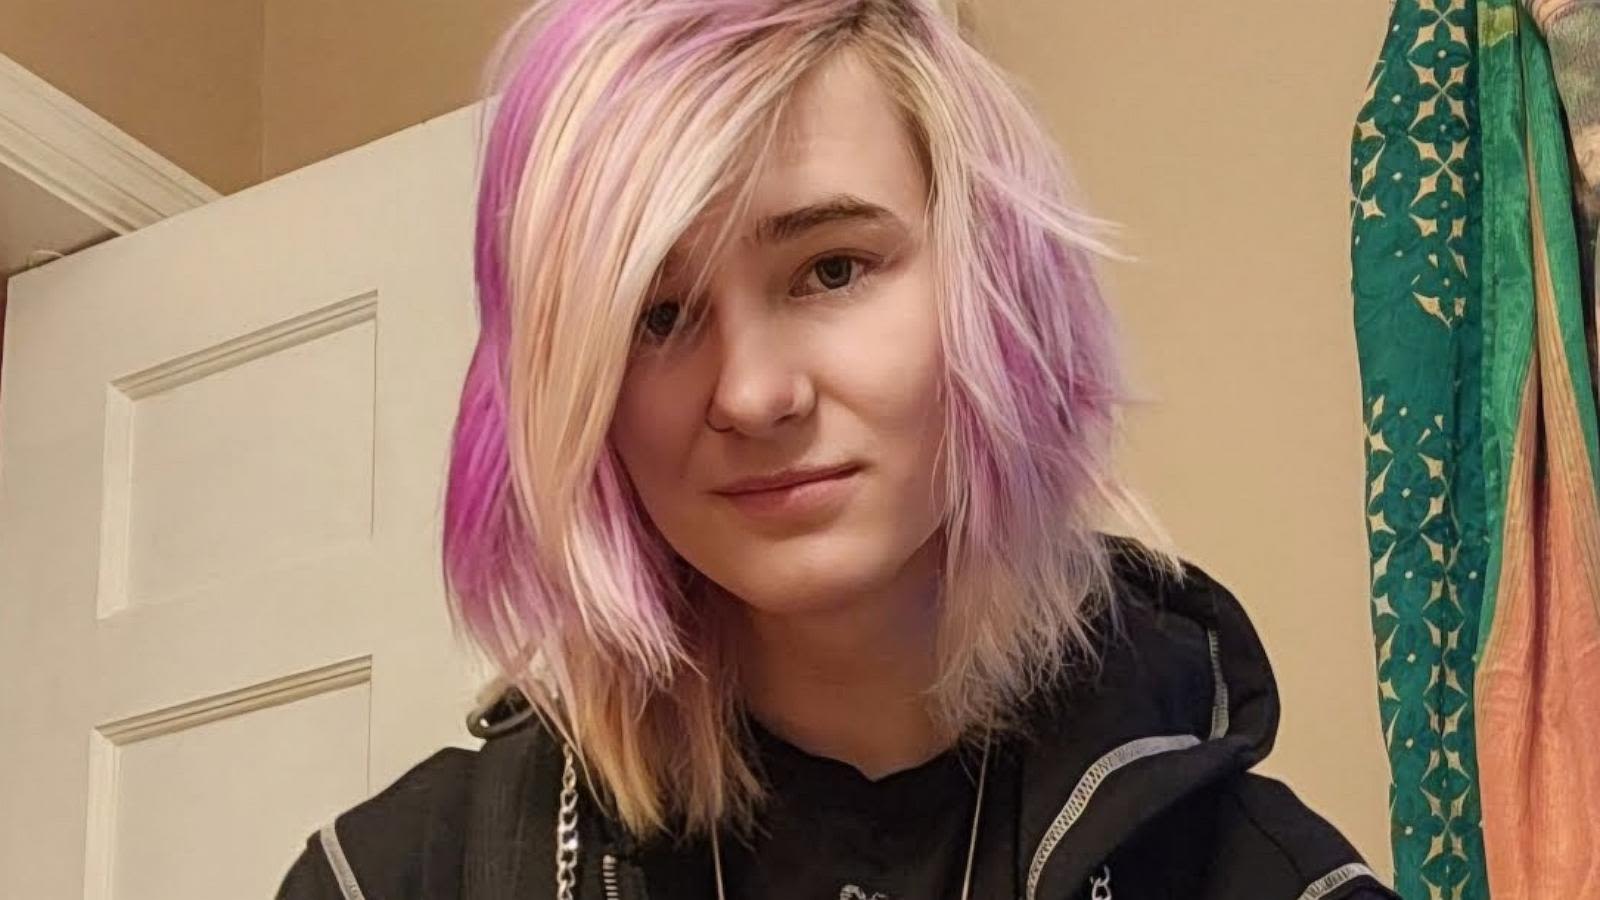 Transgender student alleges assault after using bathroom, family calls for charges